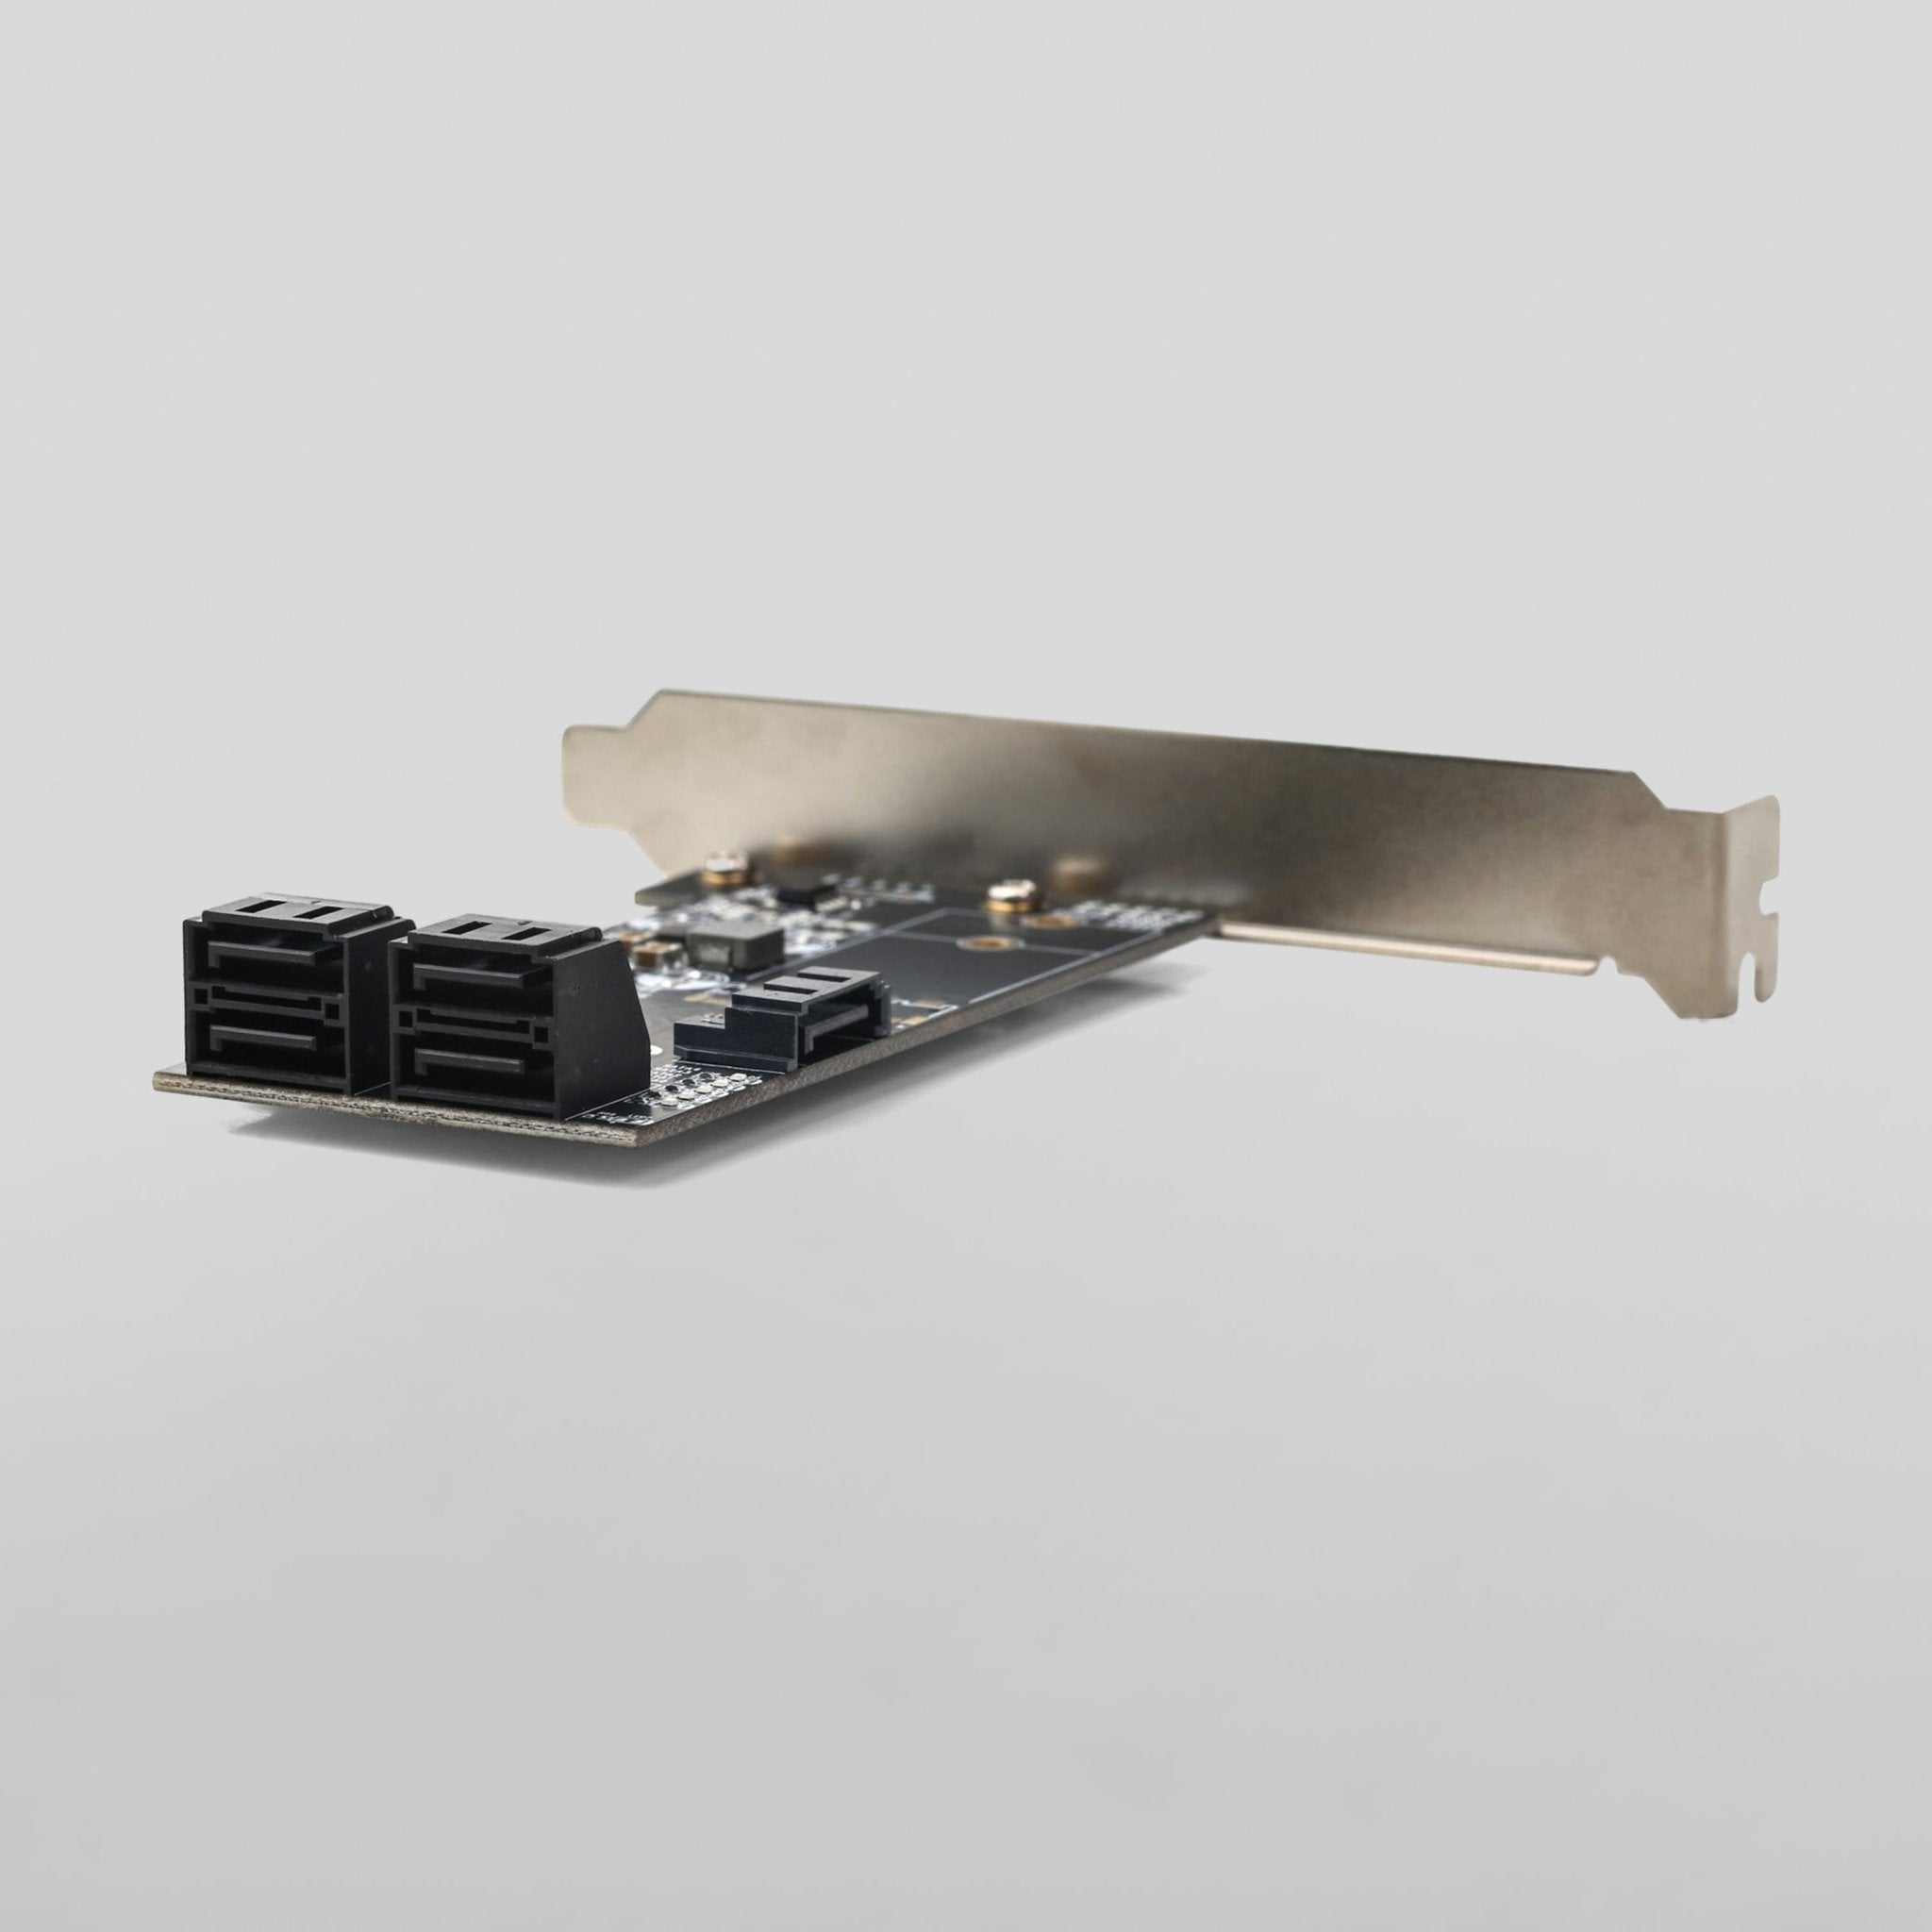 PCIe to 5 Port SATA III Adapter JMB585 Chipset - Zima Store Online